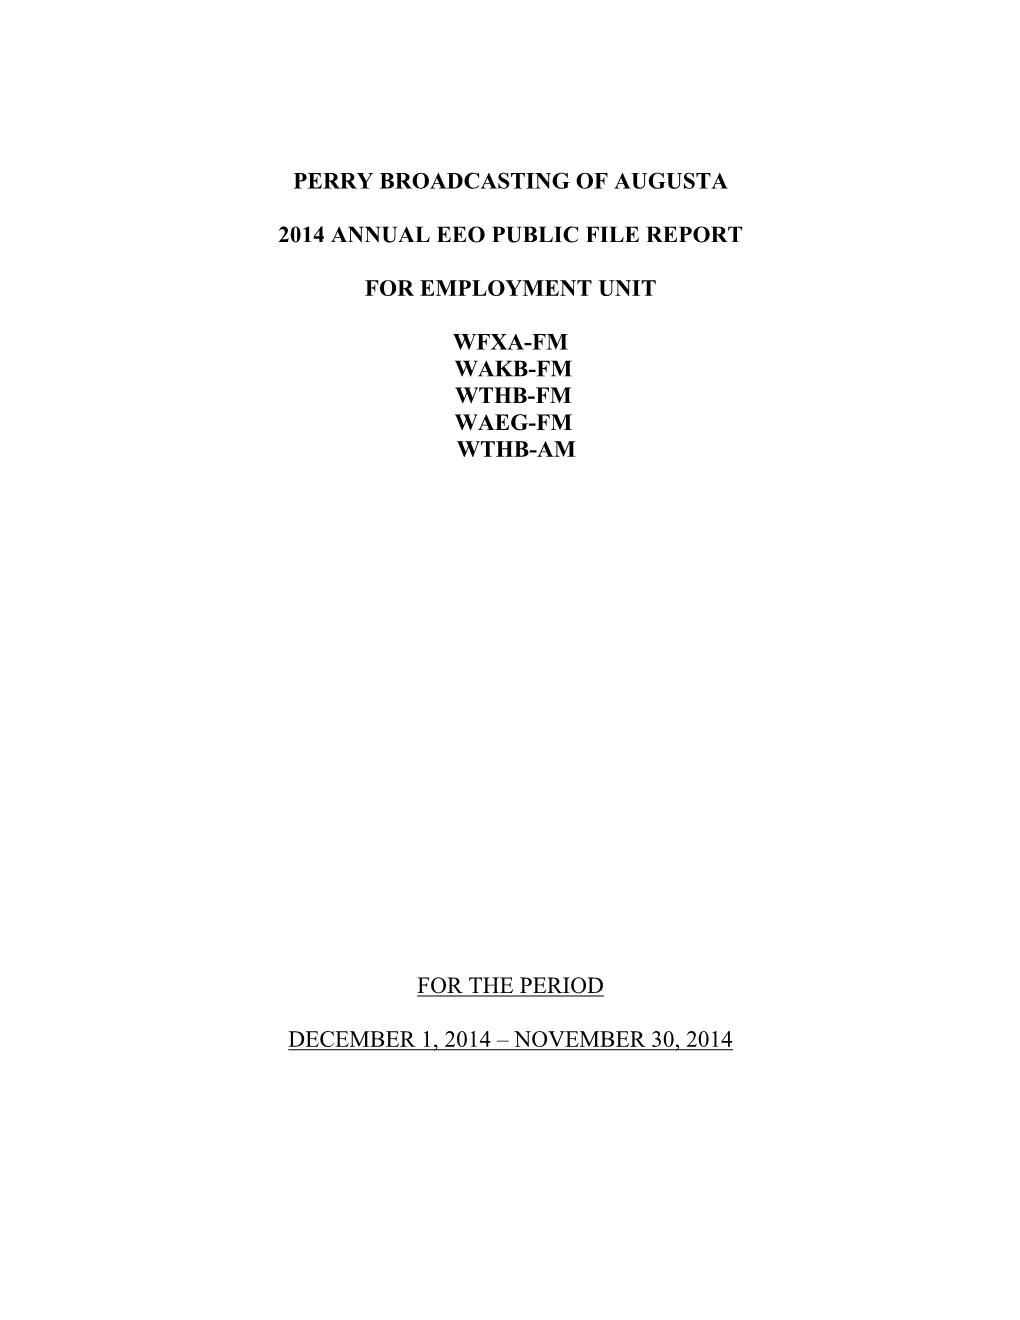 Perry Broadcasting of Augusta 2014 Annual Eeo Public File Report for Employment Unit Wfxa-Fm Wakb-Fm Wthb-Fm Waeg-Fm Wthb-Am